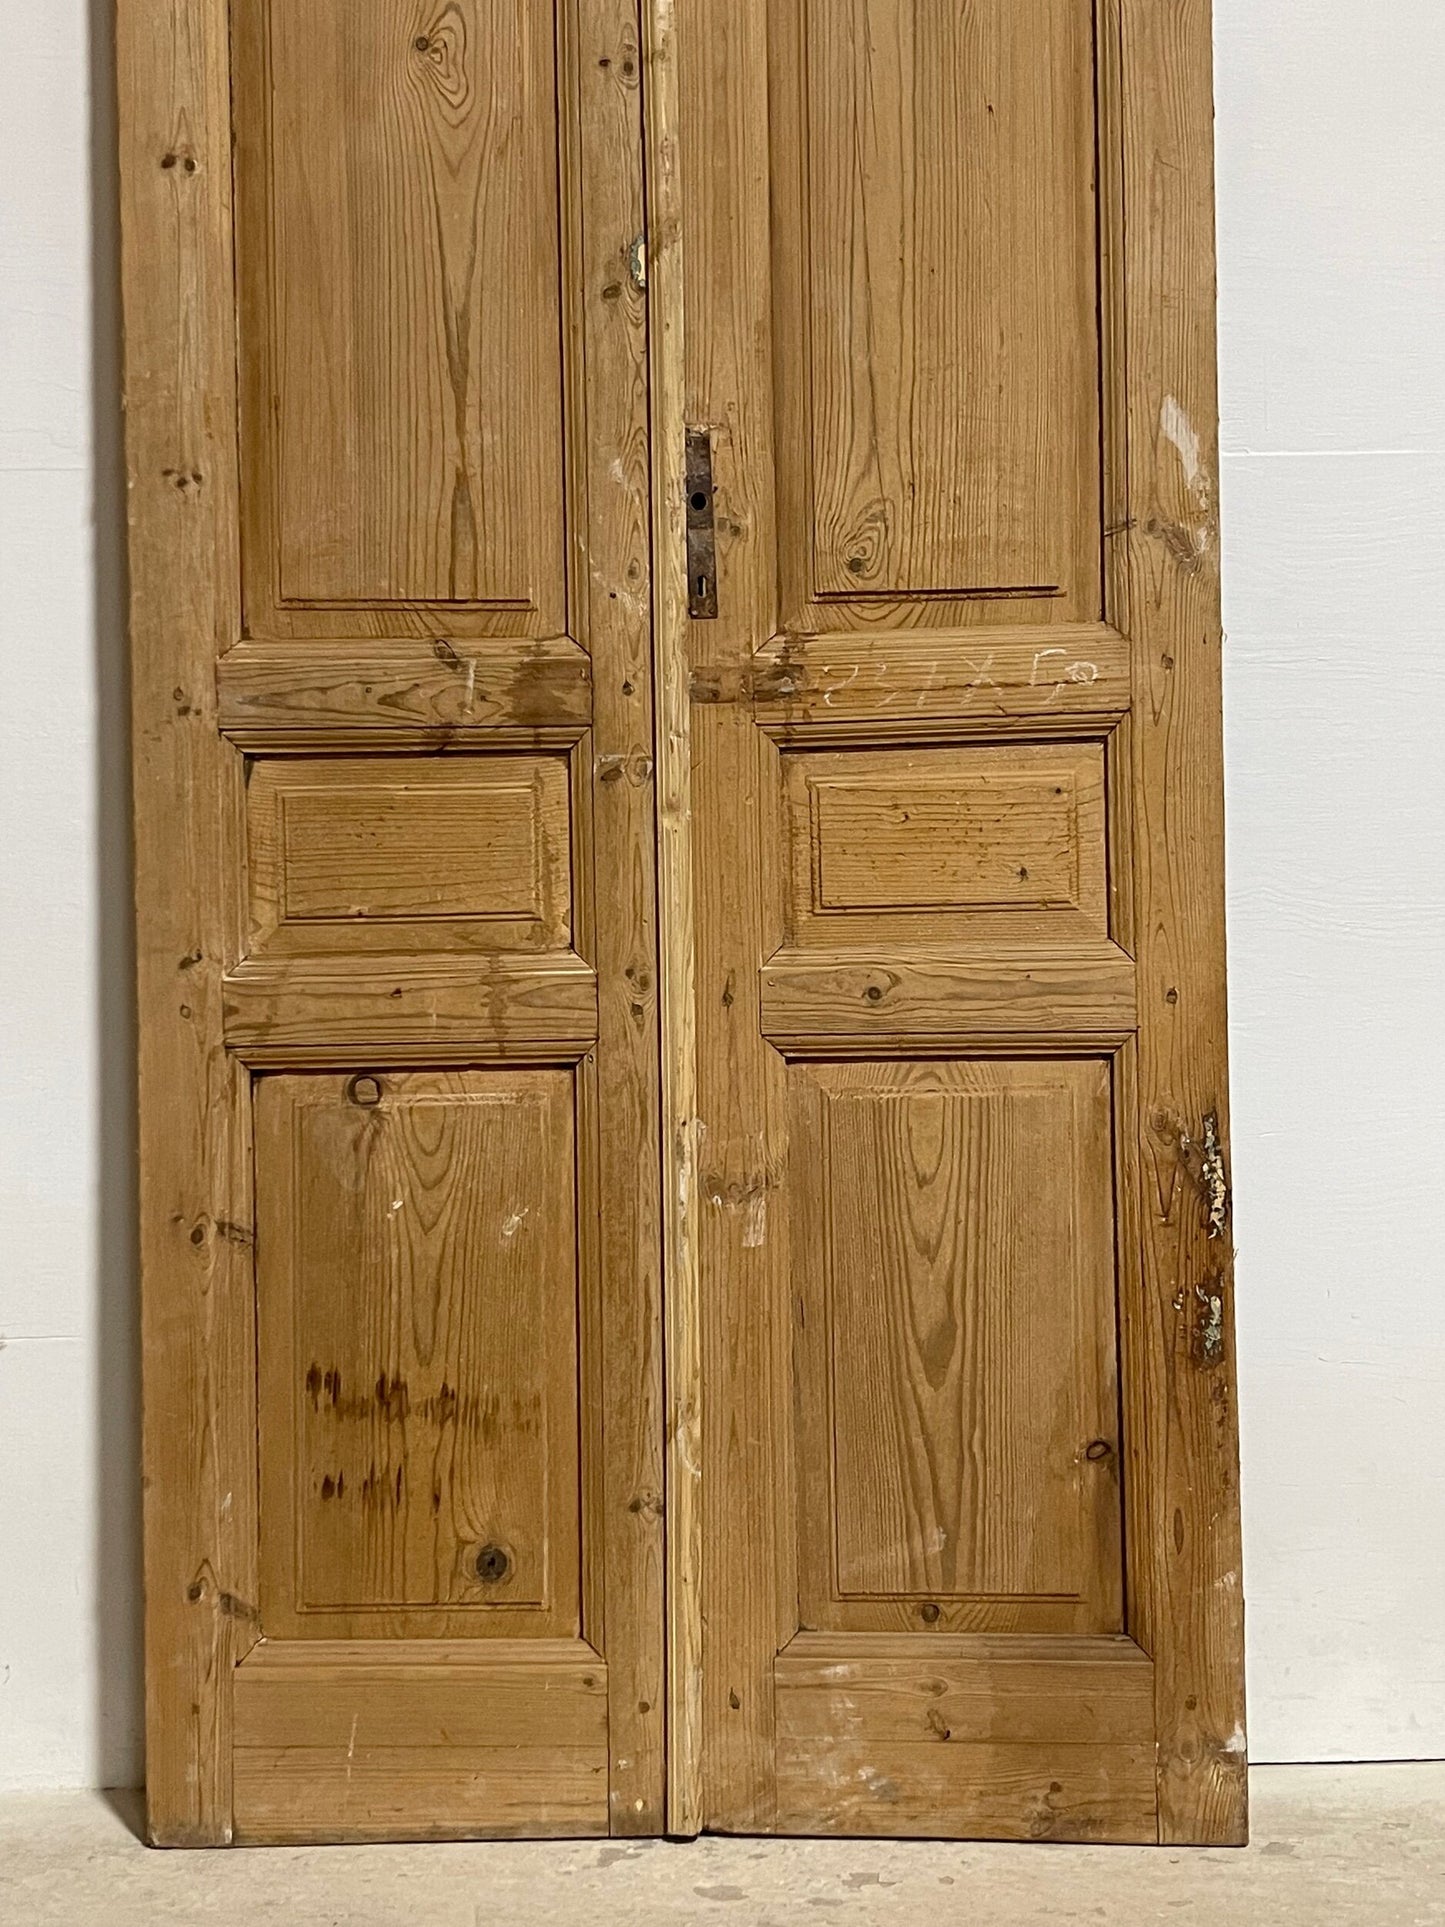 Antique French panel doors (93.75x37.5) I166